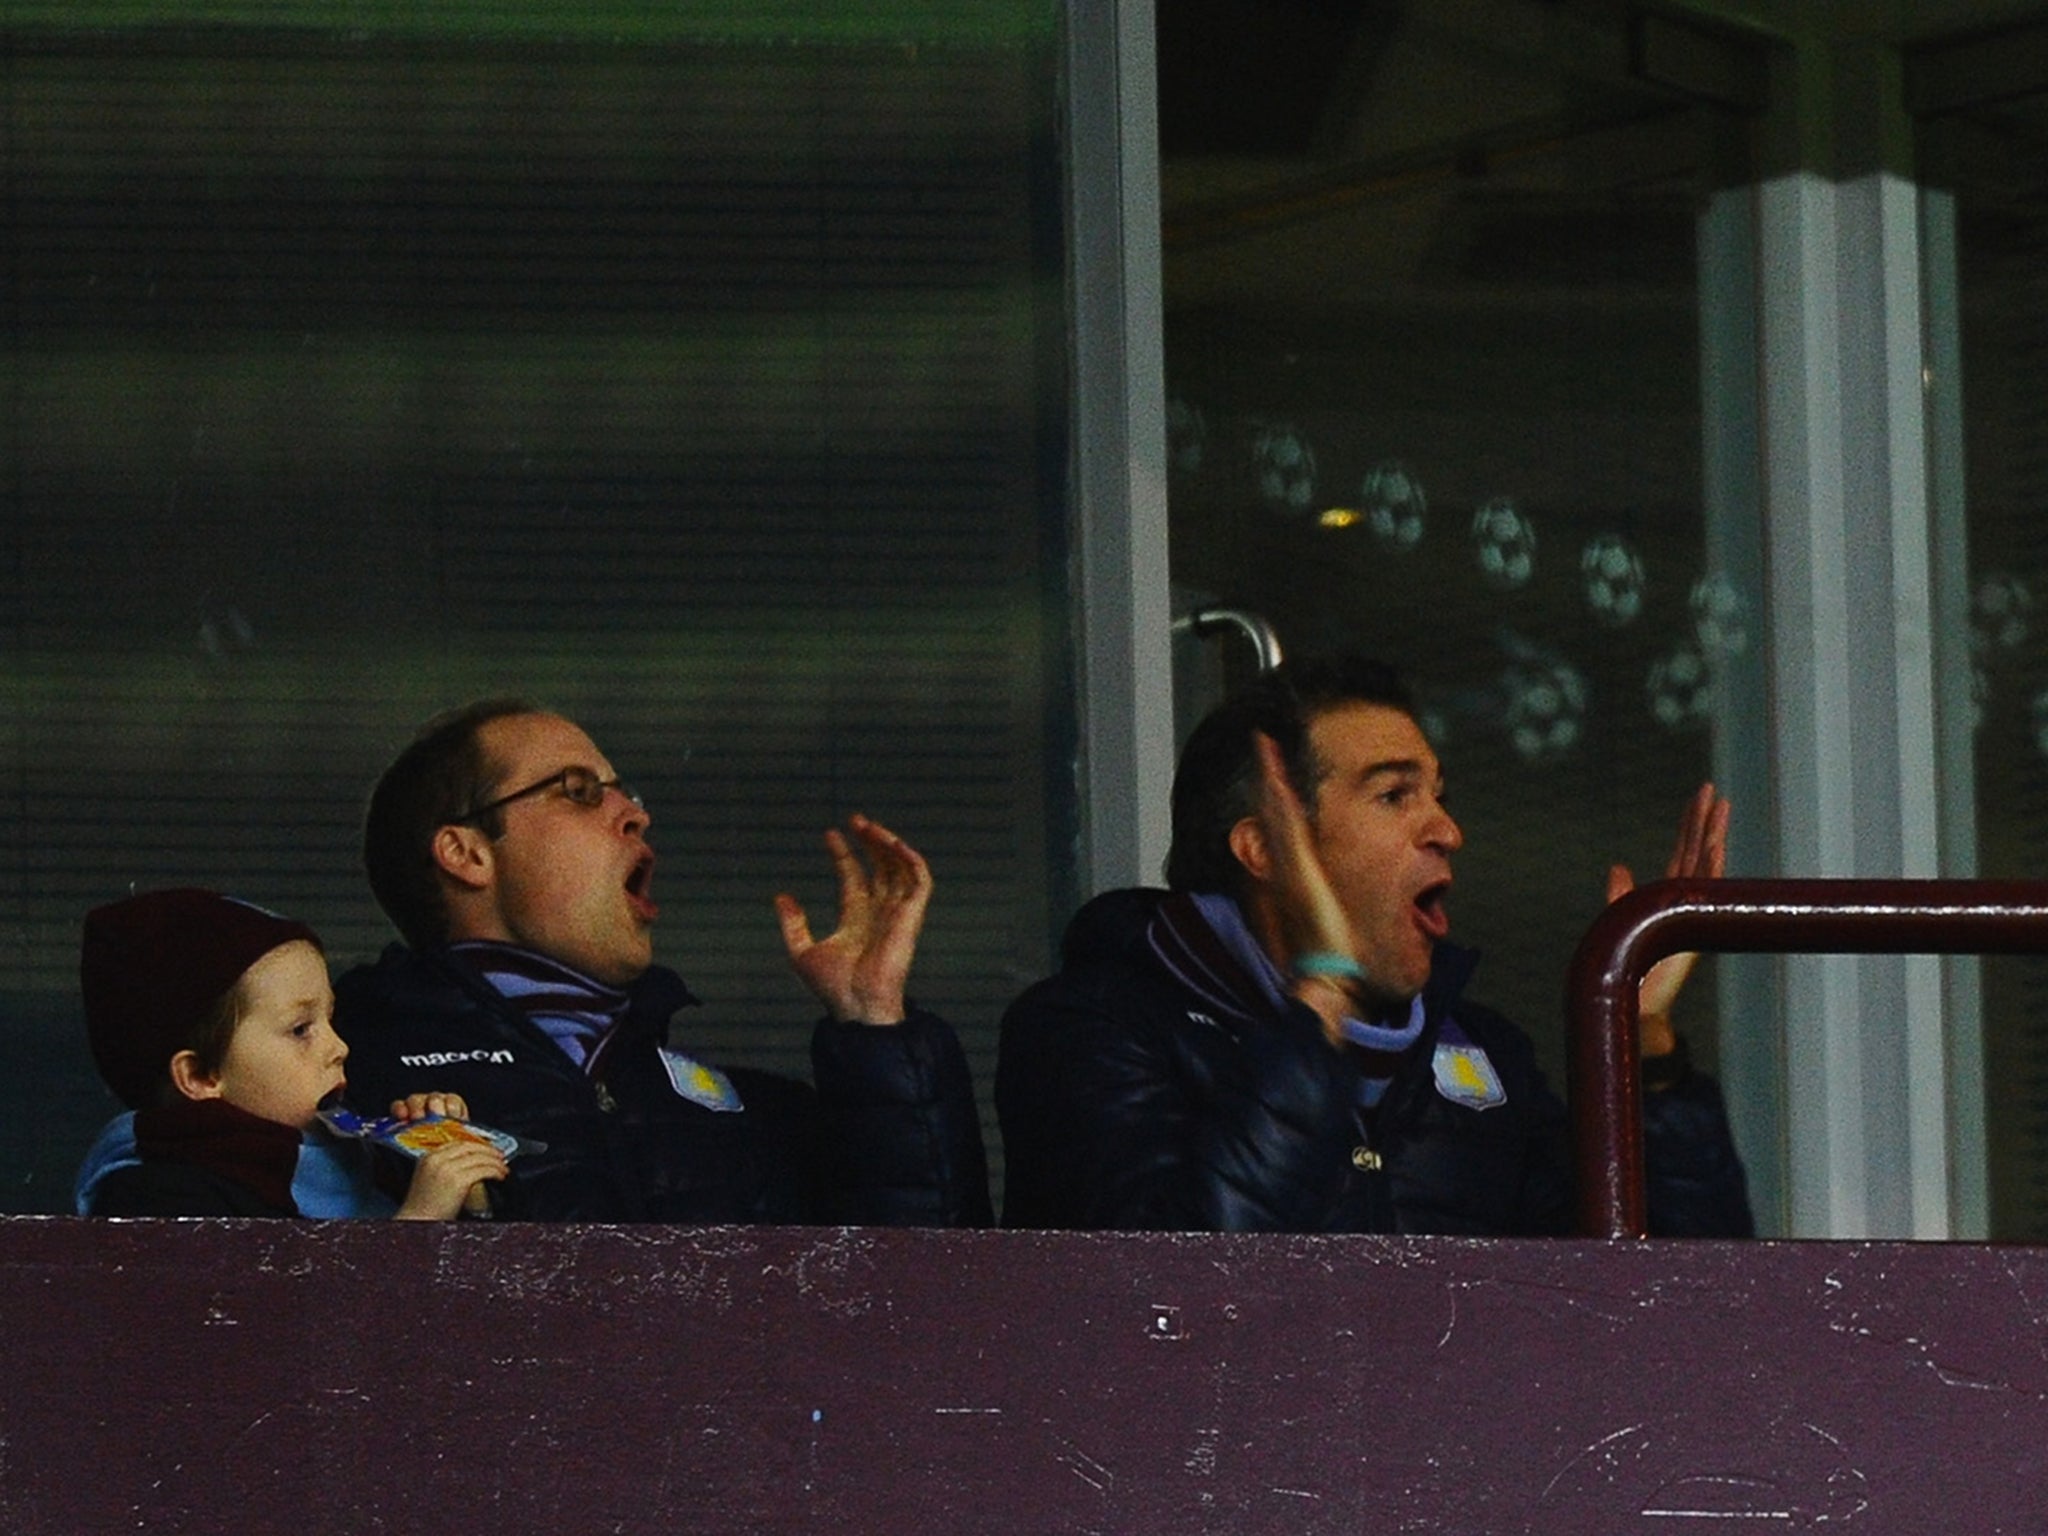 Prince William watches Aston Villa go close to scoring